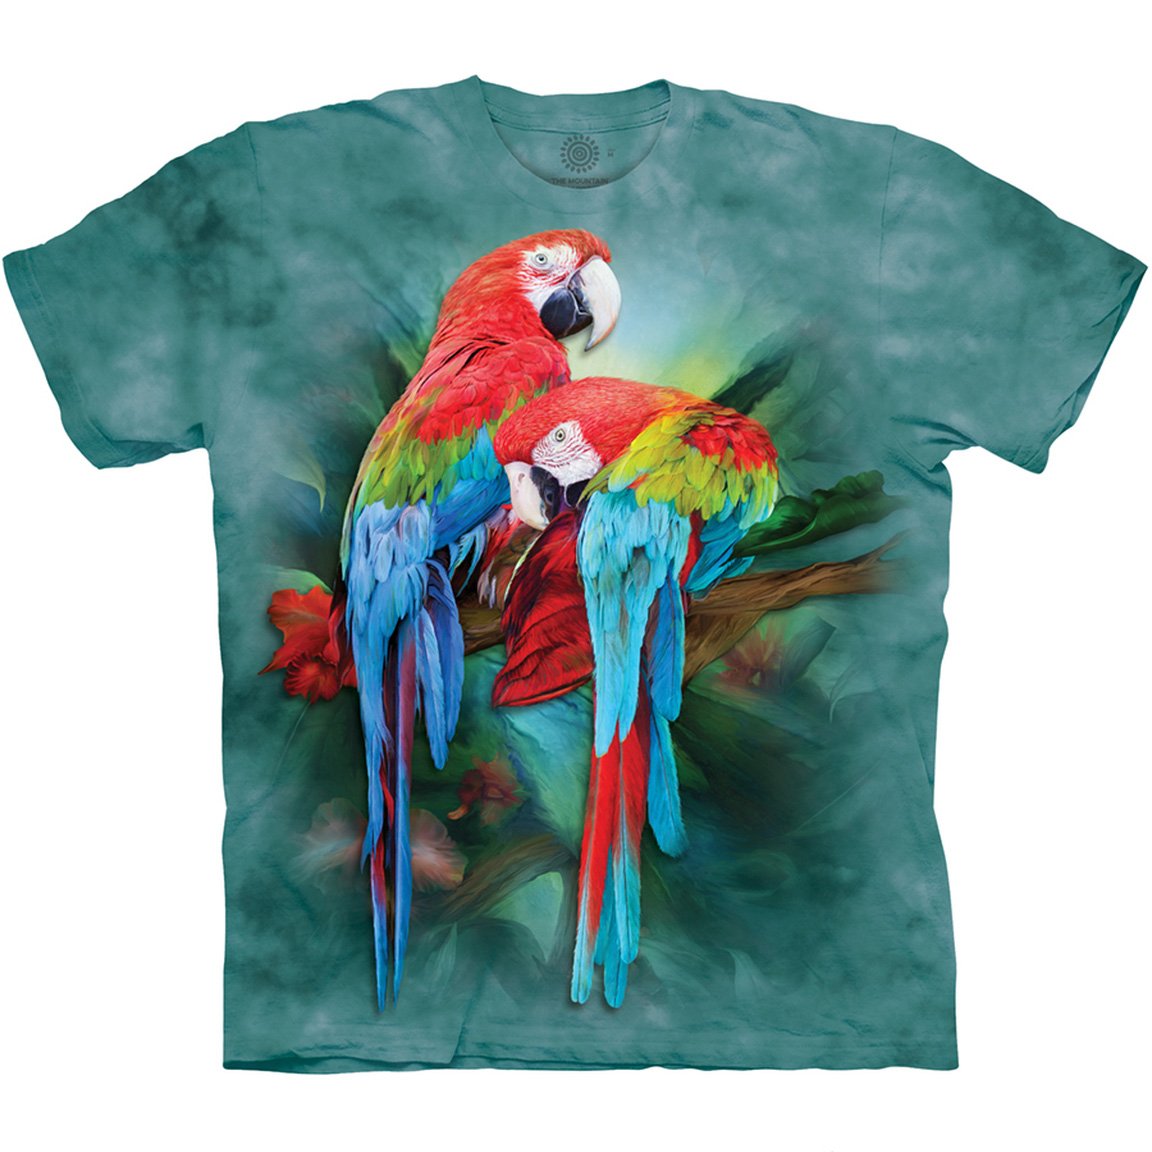 The Mountain Macaw Mates - T-Shirt